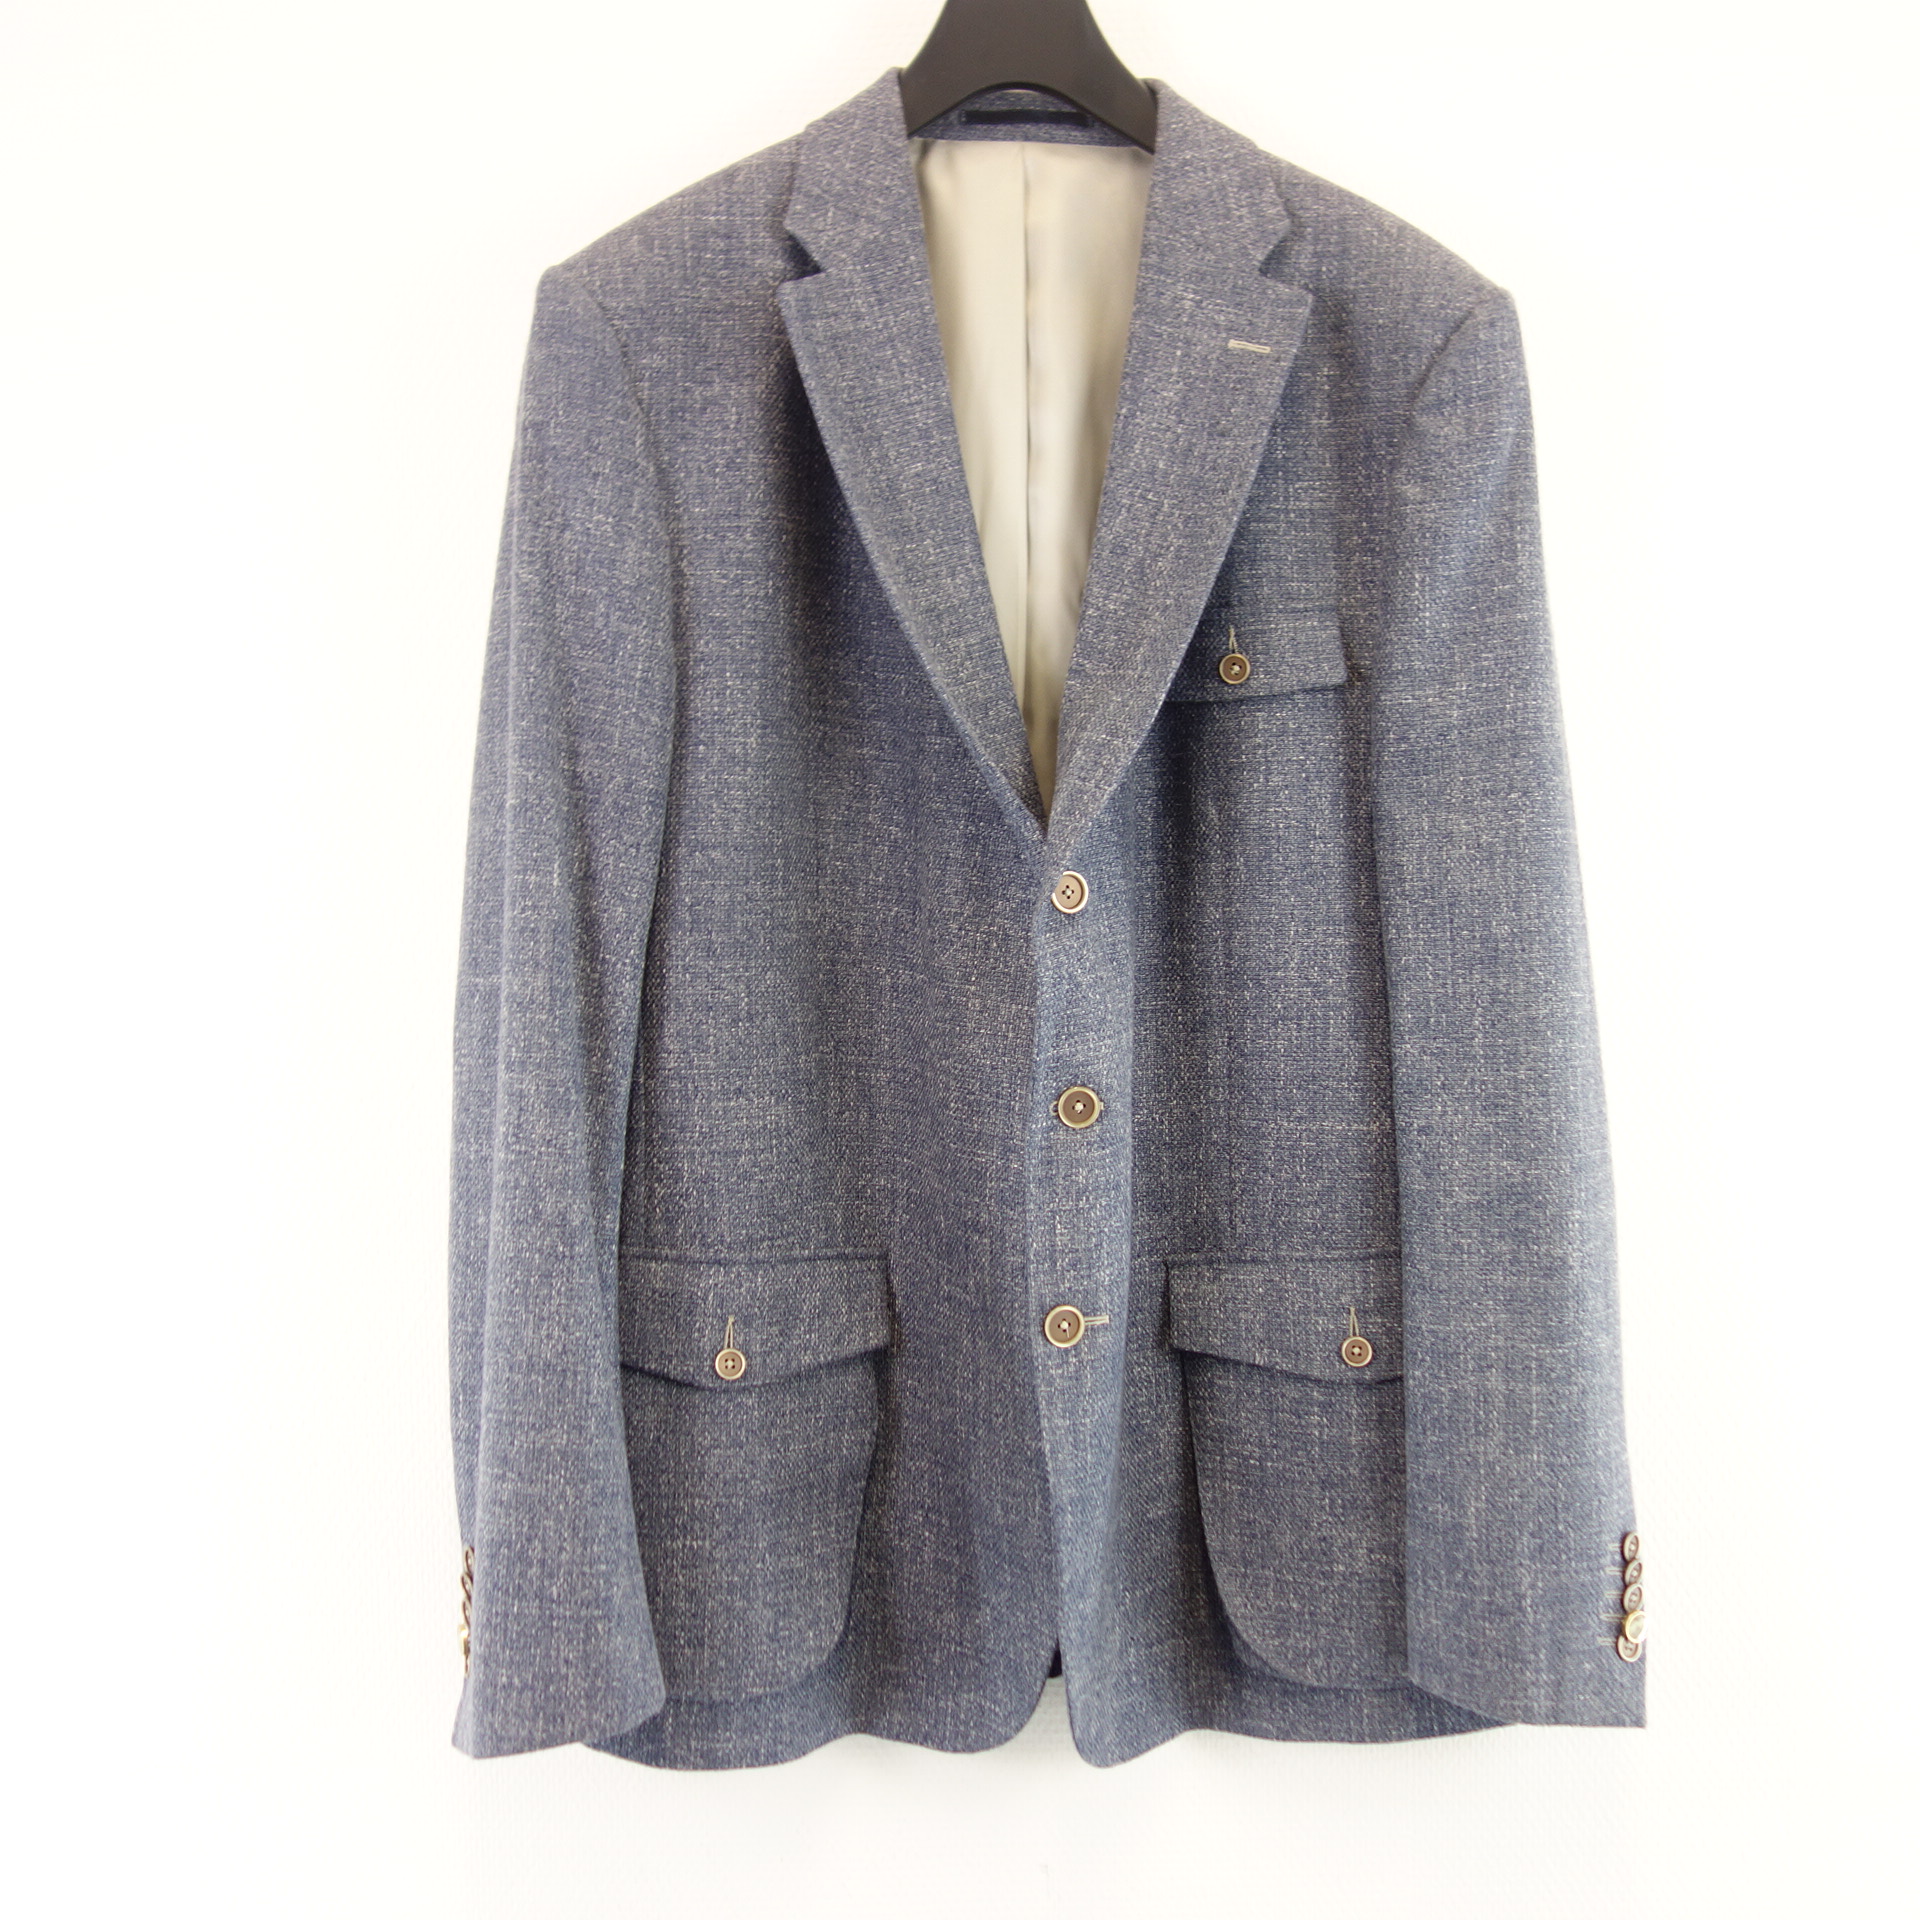 CIRCLE OF GENTLEMEN Marzotto Herren Sakko Jacke Jacket Blau Baumwolle 58 Modell Aris